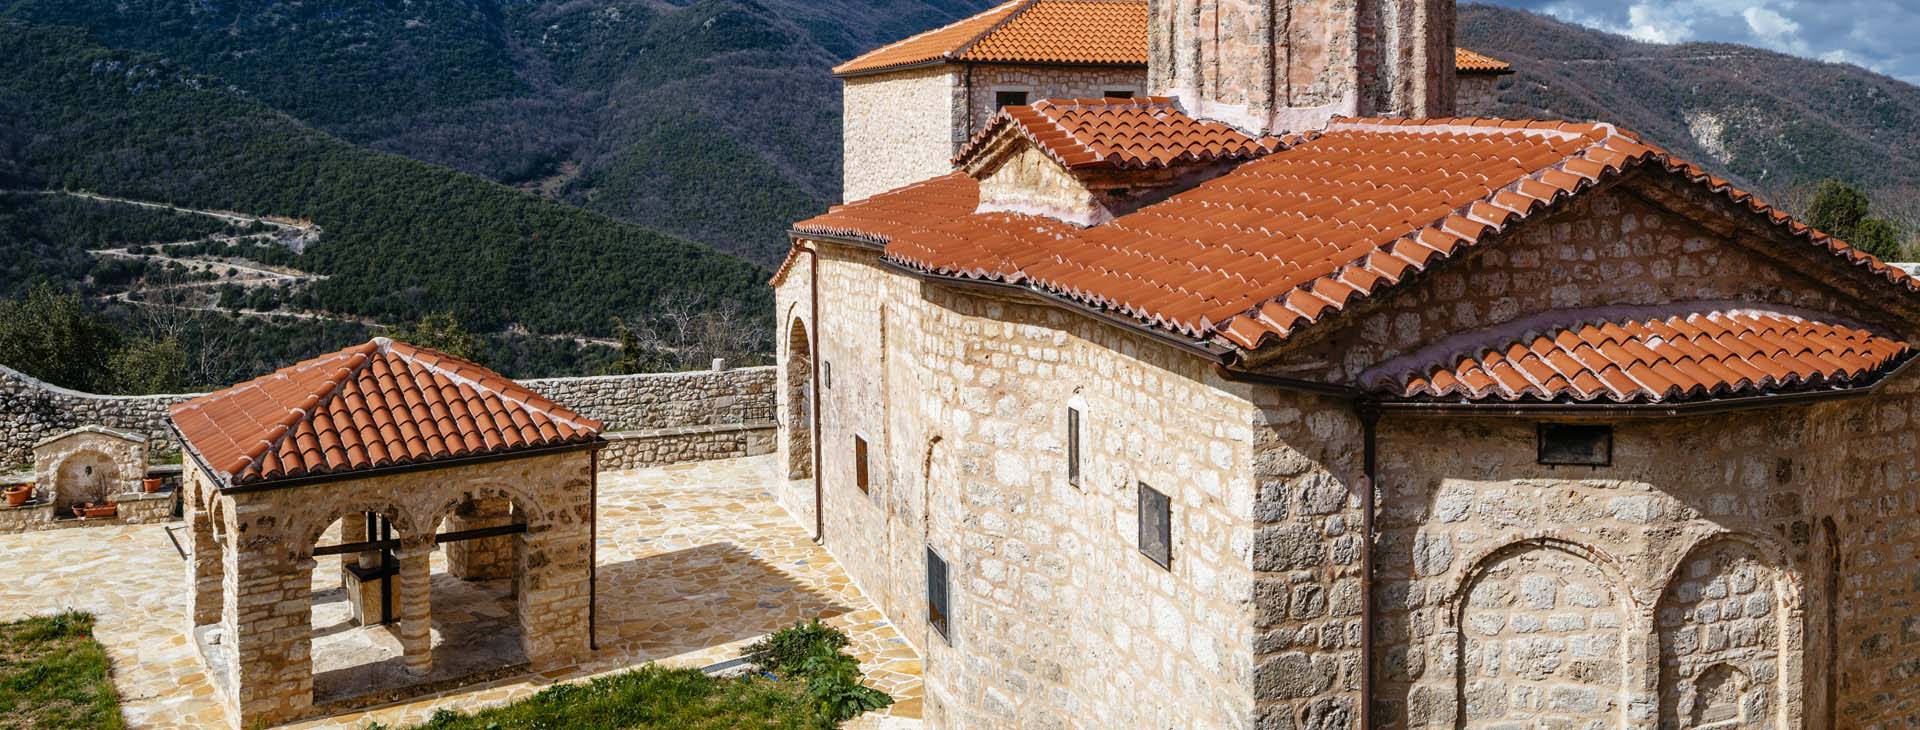 Monastery of Sosino, Ioannina